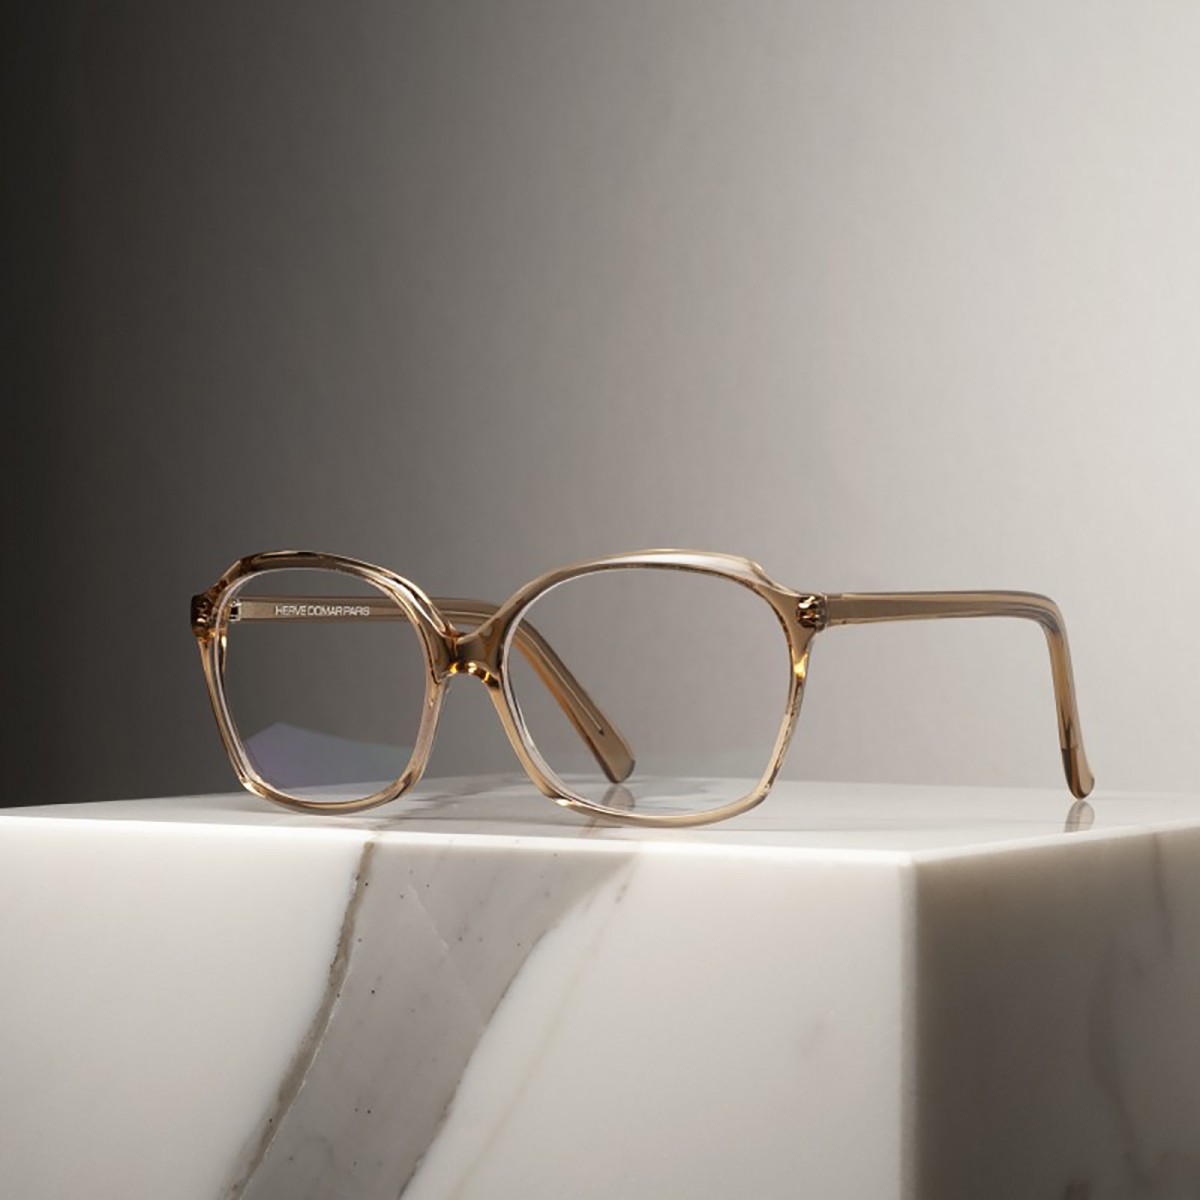 0111 - Glasses in acetate handmade in France